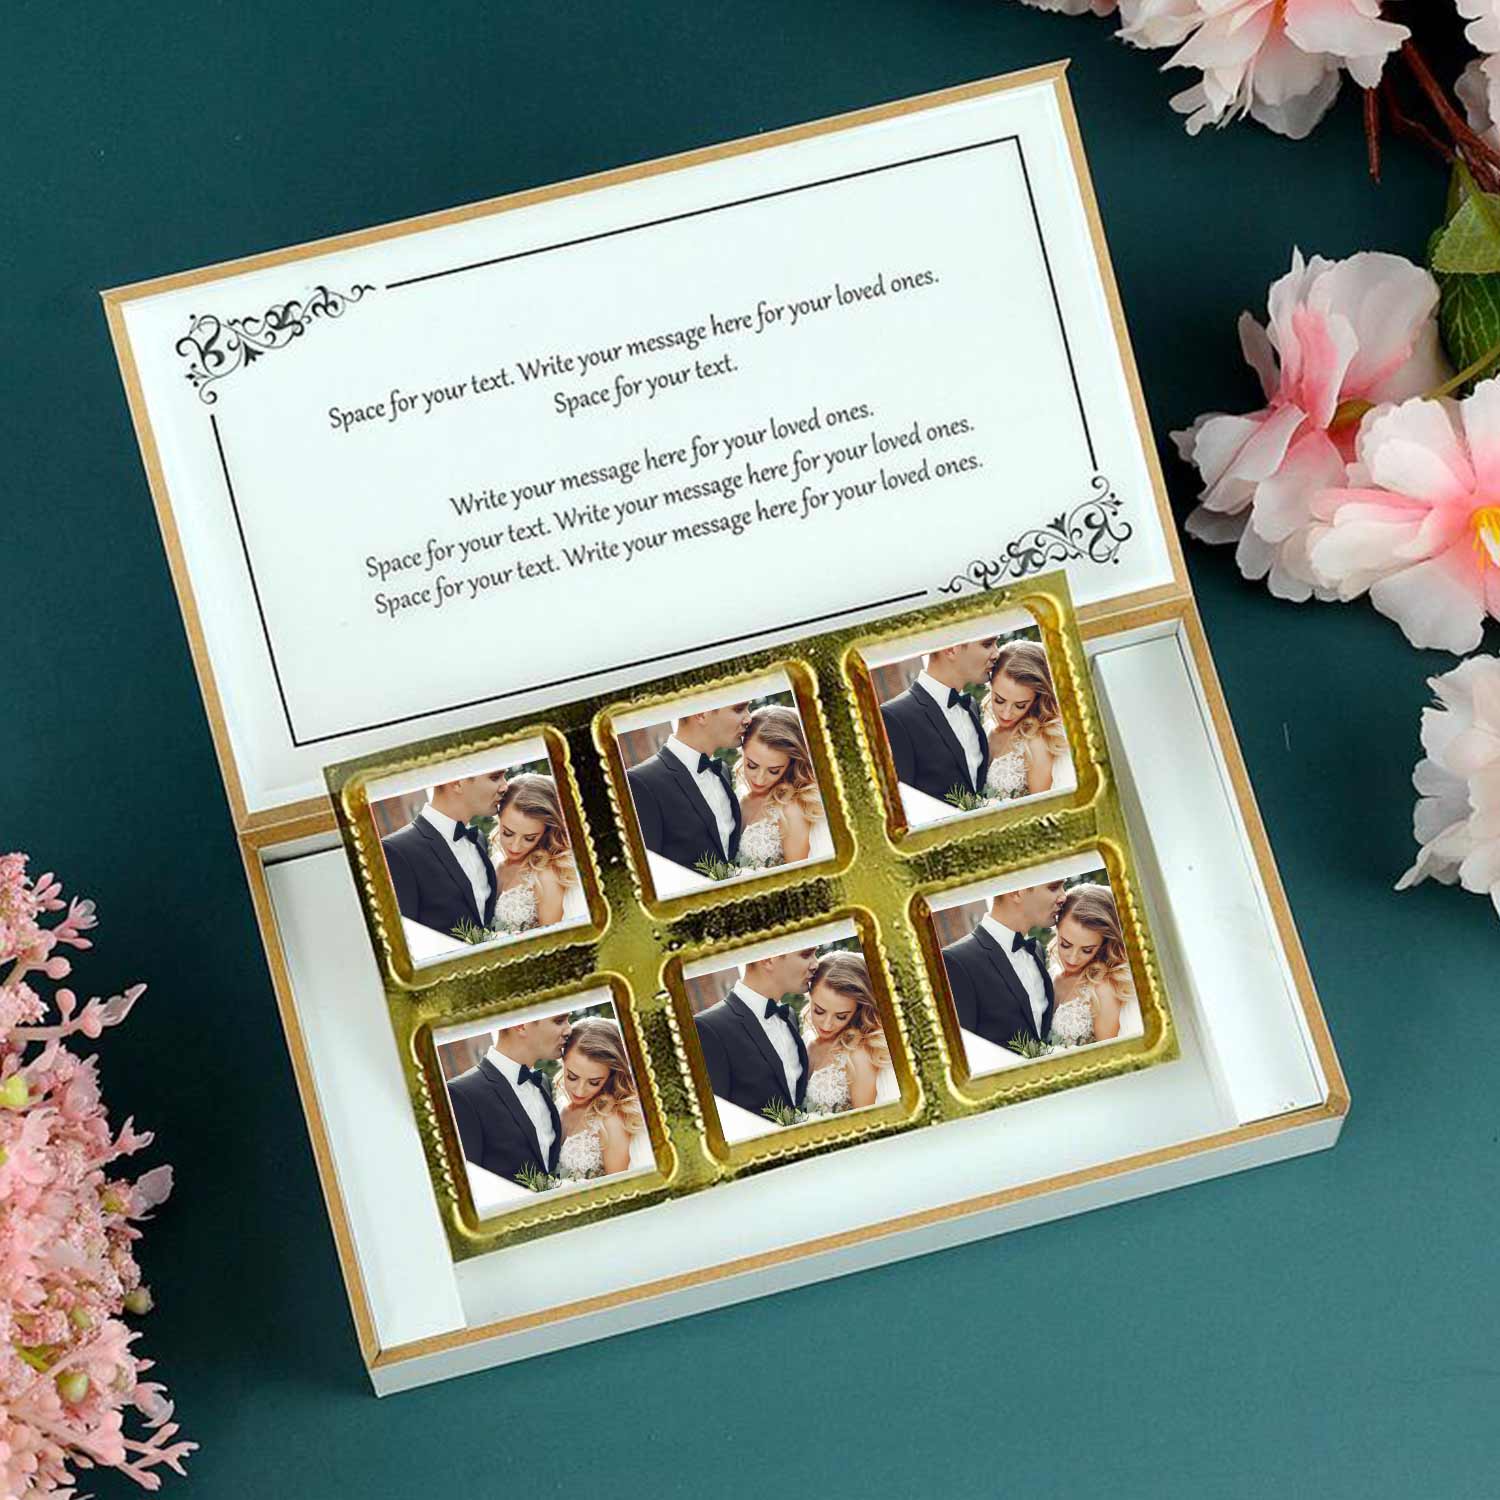 Chocolate for wedding gift.  Wedding card gift box ideas.  Chocolate gift box wedding invitation.  Wedding invitation gift ideas    Invitation box for birthday